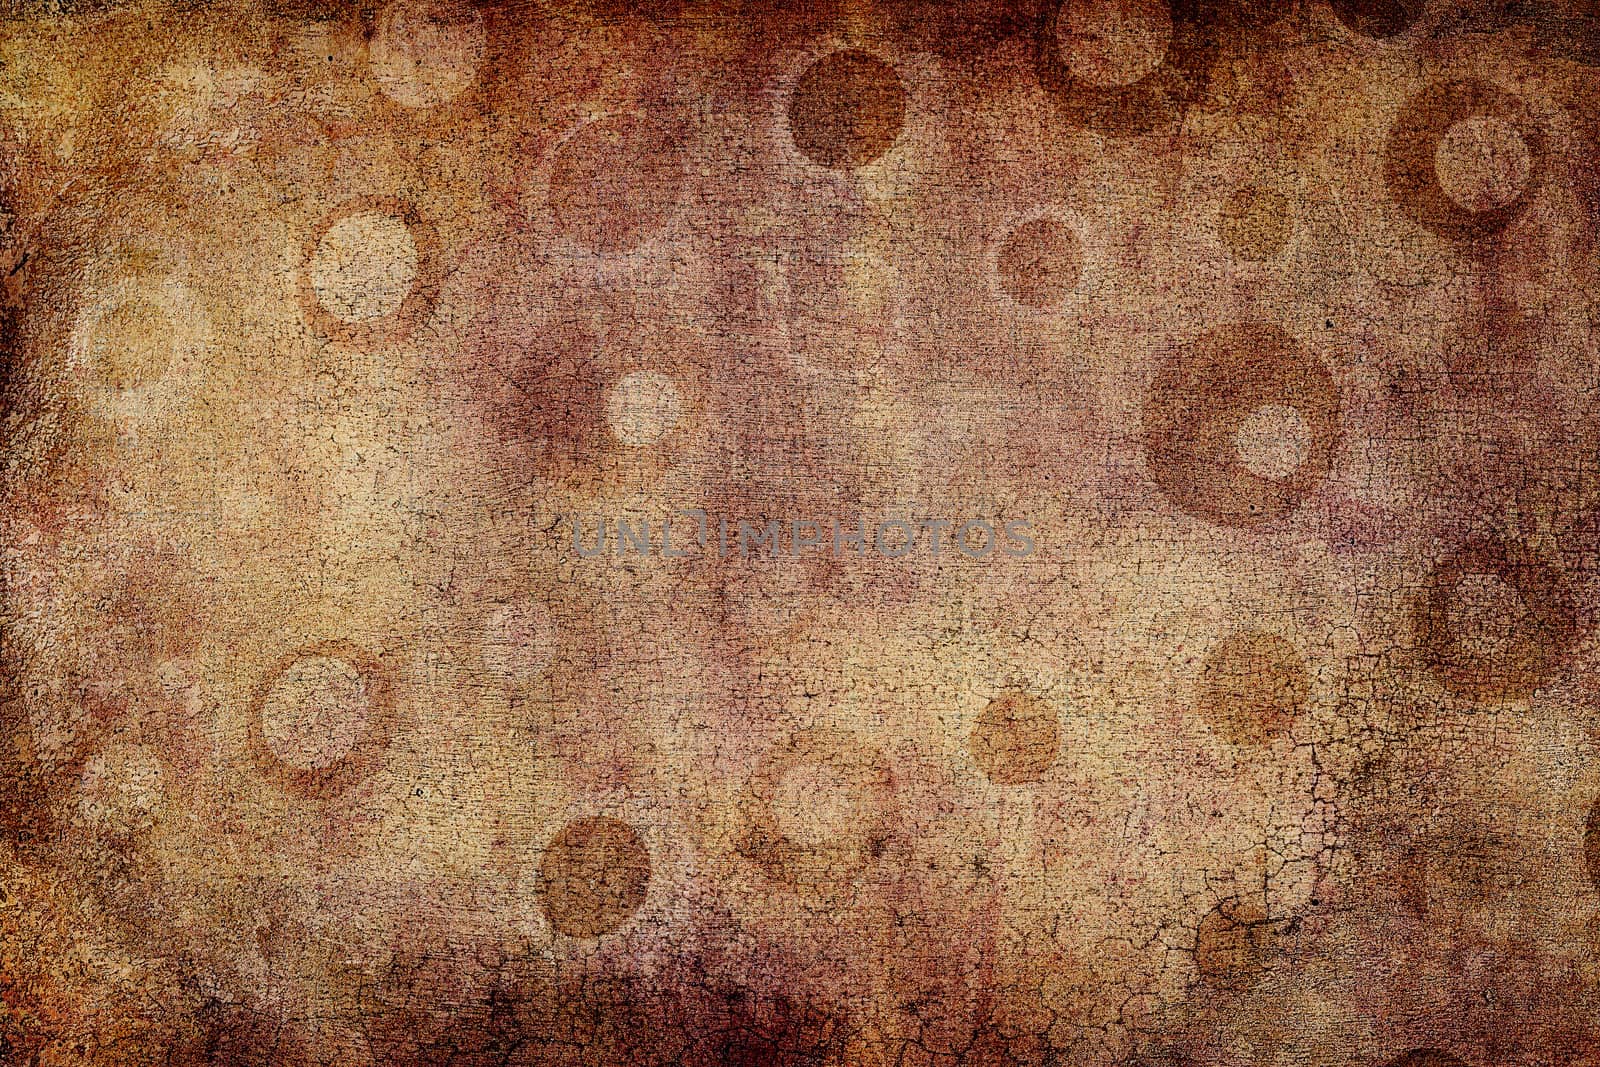 Brown Dots Texture with Craquelures by MaxalTamor